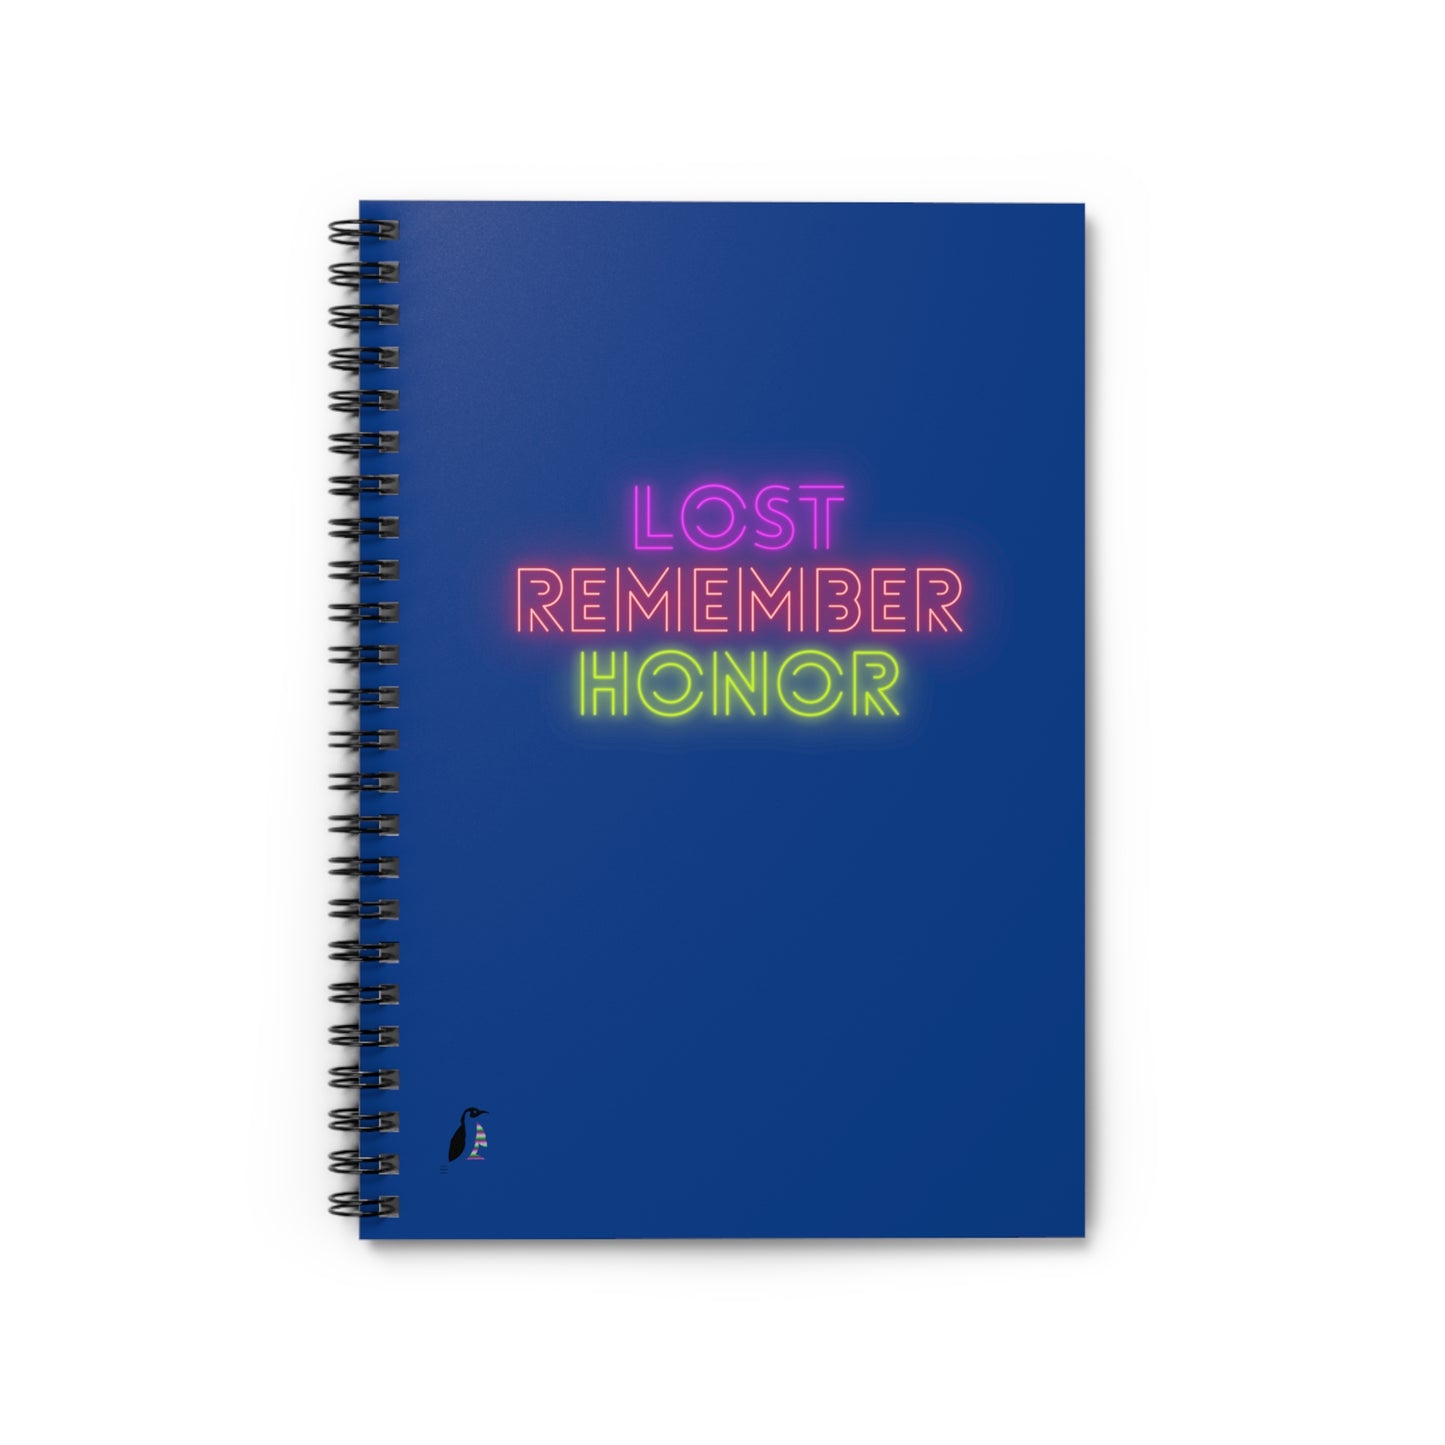 Spiral Notebook - Ruled Line: Lost Remember Honor Dark Blue